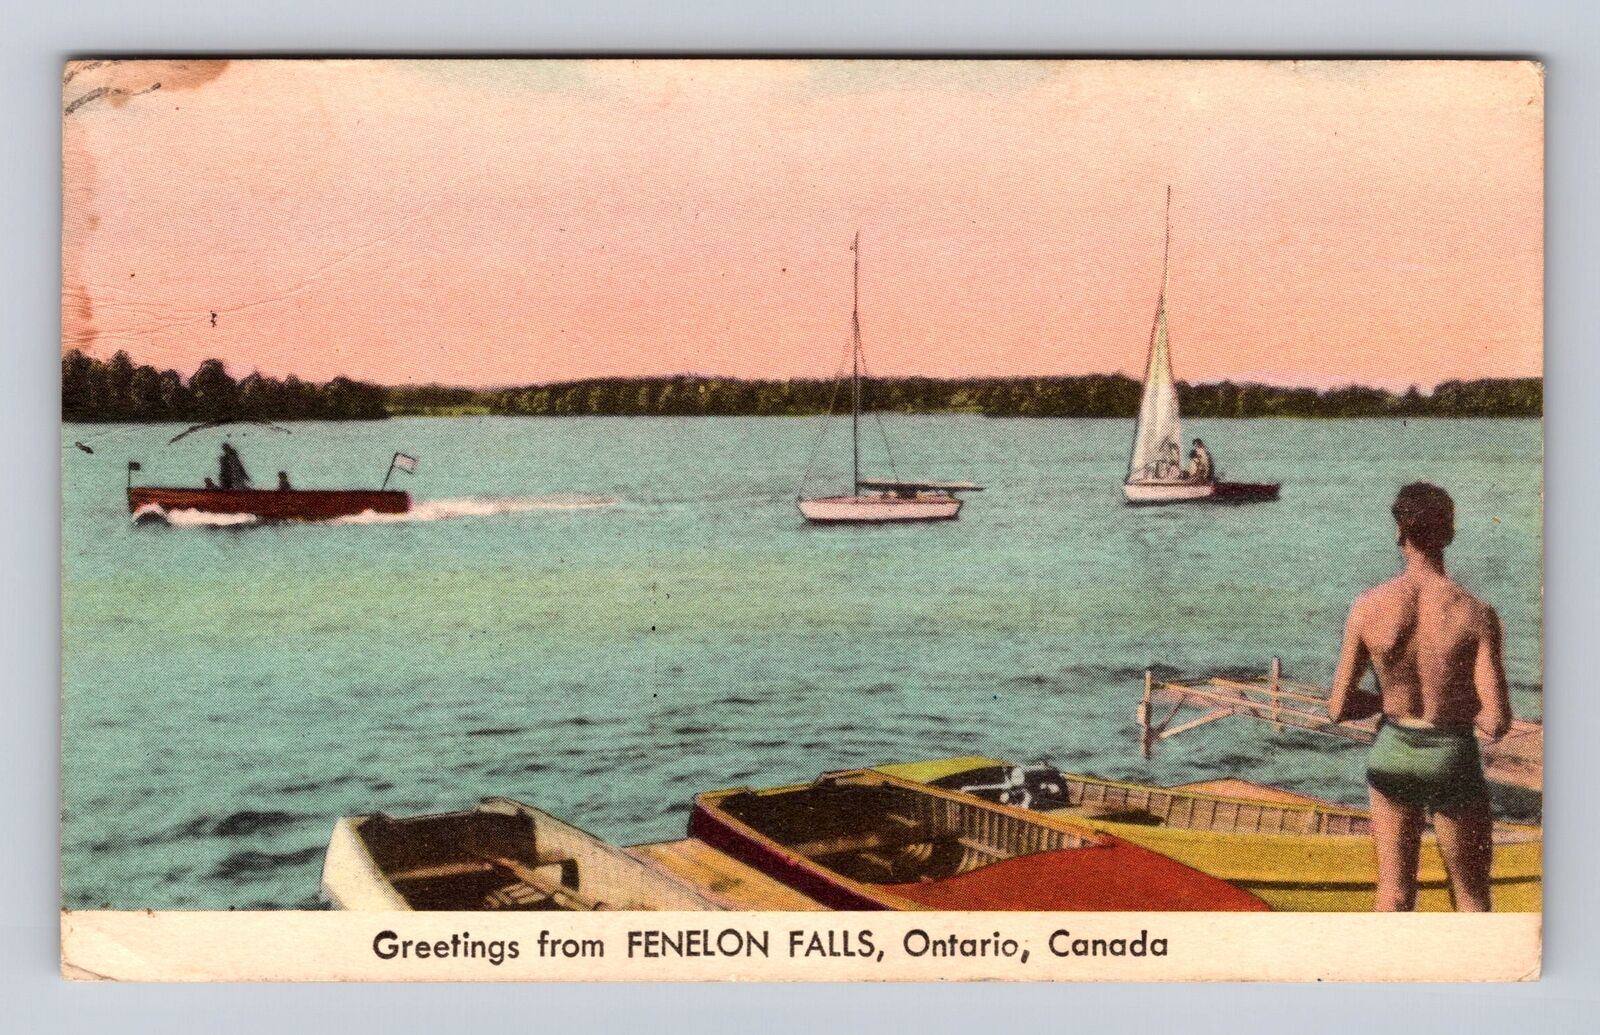 Fenelon Falls Ontario-Canada, Scenic General Greetings, Vintage Postcard